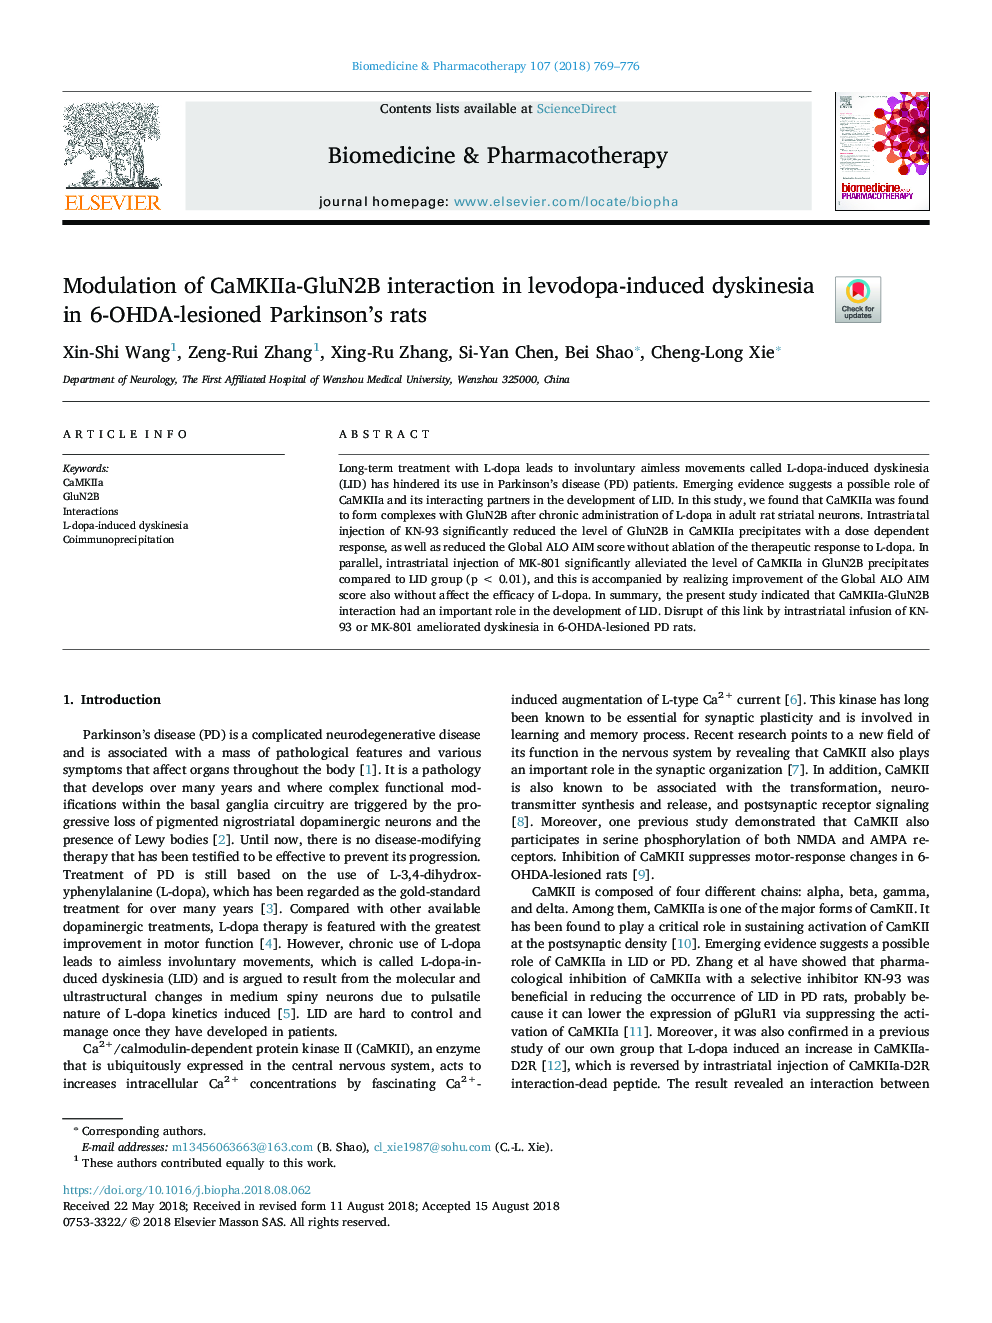 Modulation of CaMKIIa-GluN2B interaction in levodopa-induced dyskinesia in 6-OHDA-lesioned Parkinson's rats